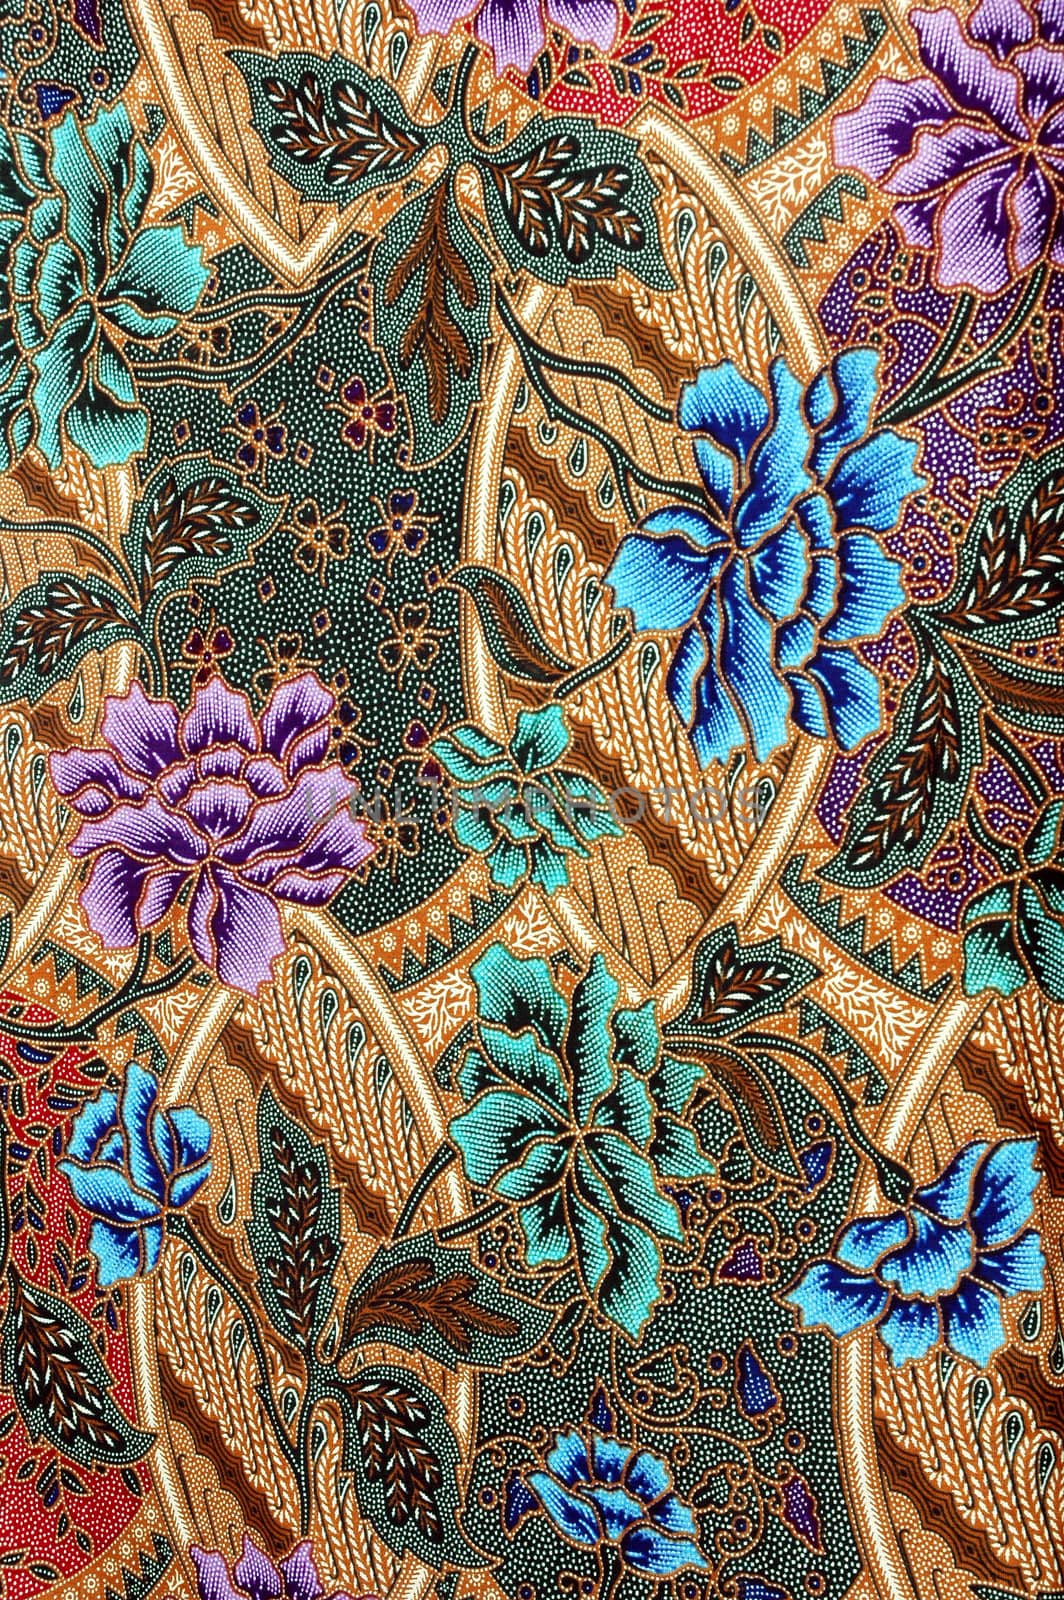 Indonesian fabric design details by antonihalim